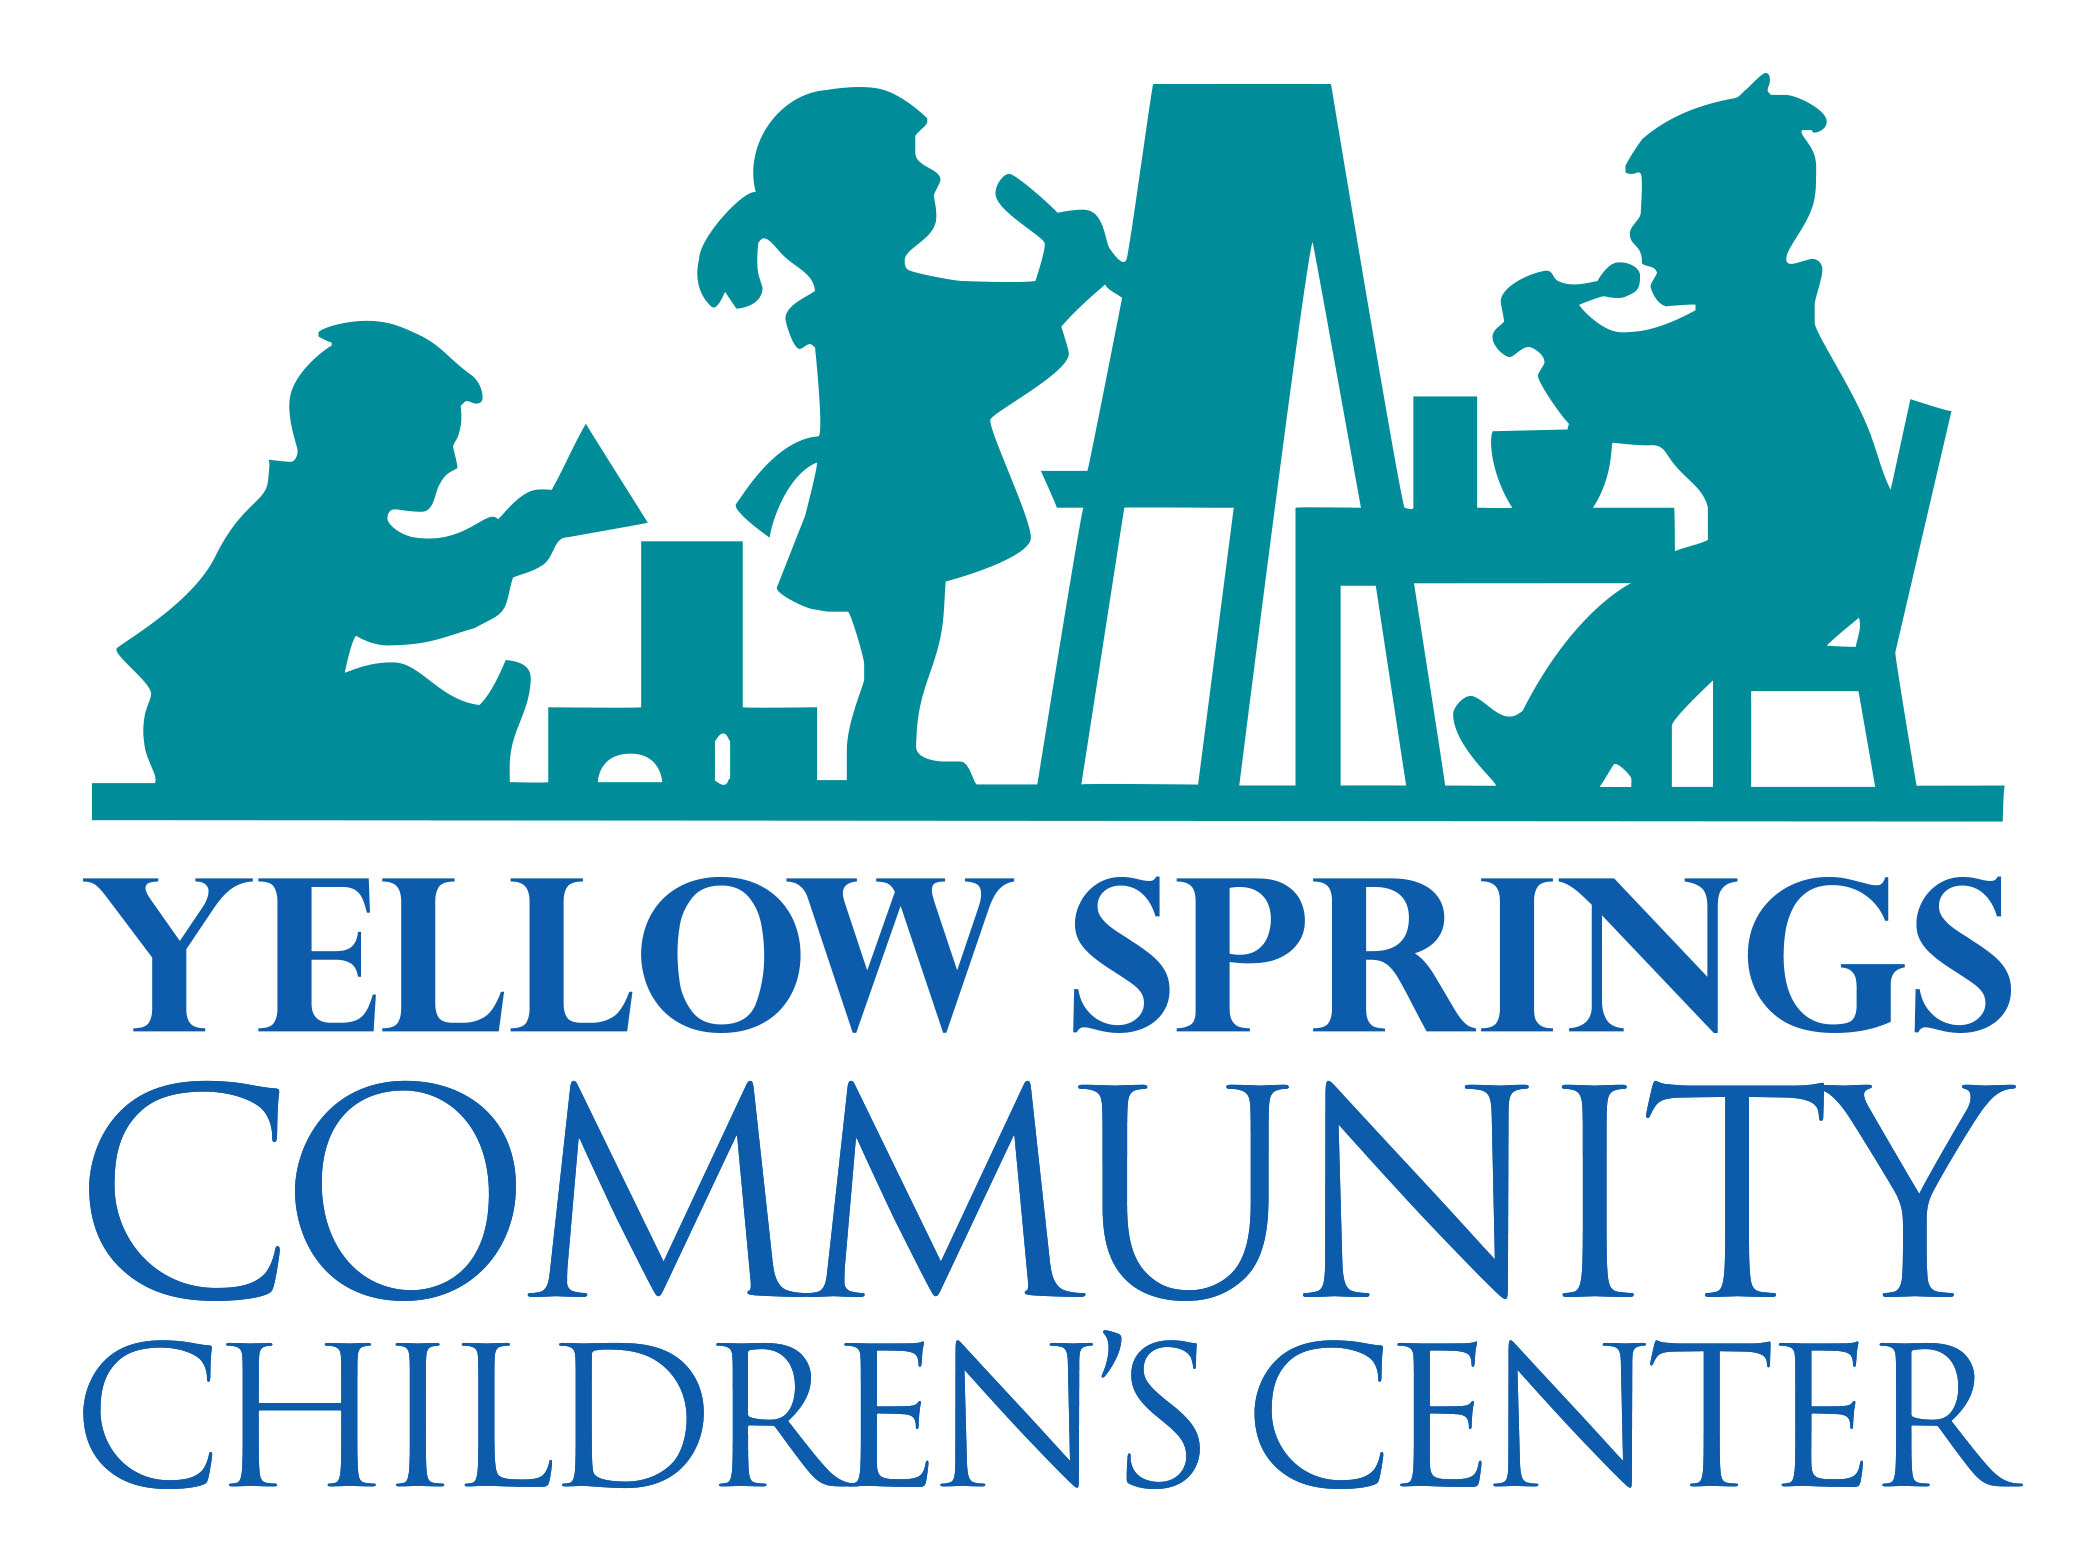 YELLOW SPRINGS COMMUNITY CHILDREN'S CENTER